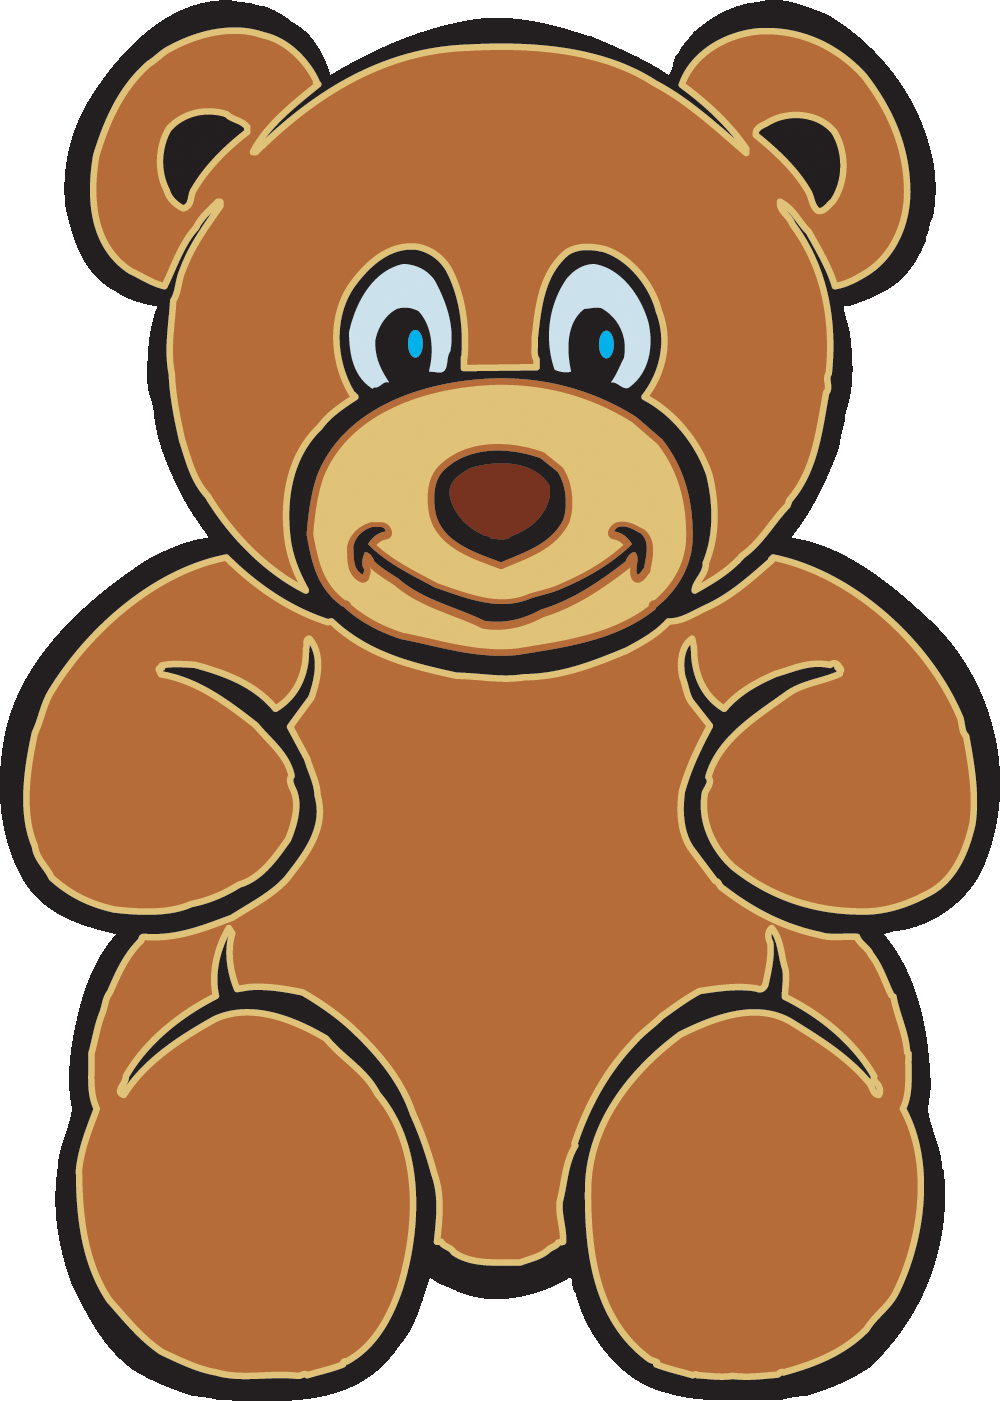 Big Cute Teddy Bears Free Cli - Cute Bear Clipart